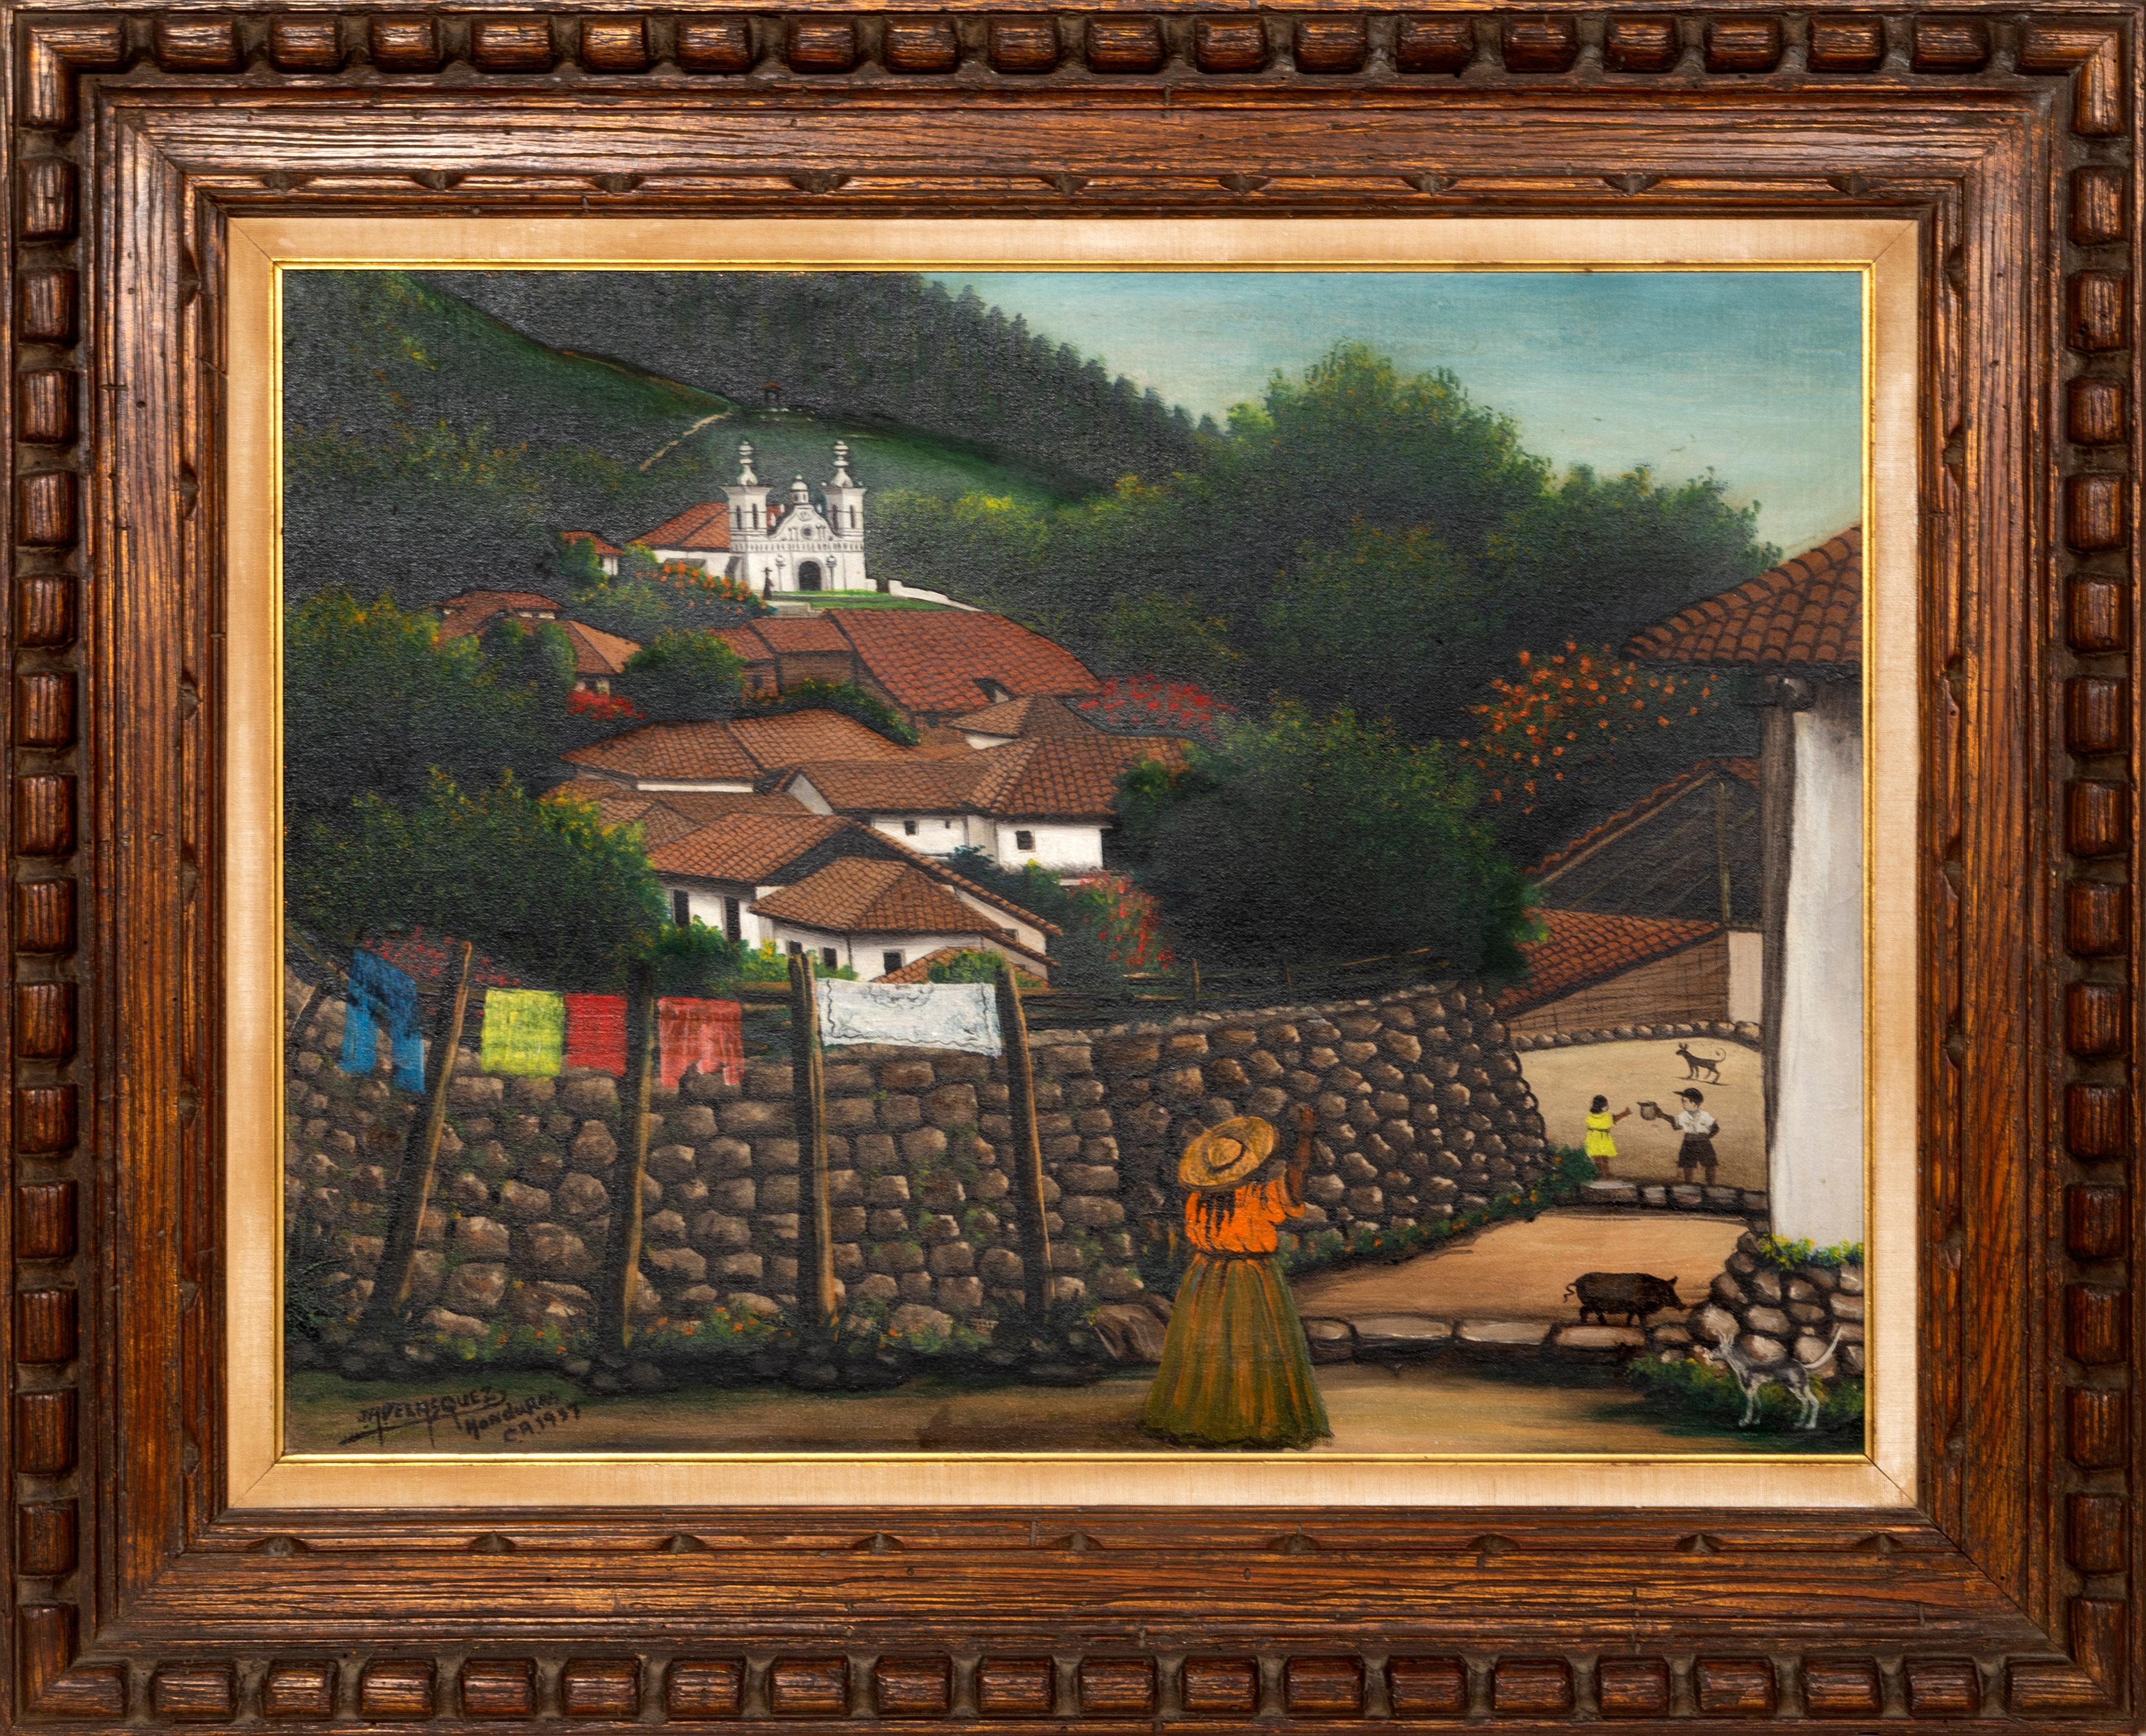 San Antonio de Oriente, Honduras, Painting by Jose Antonio Velasquez 1957